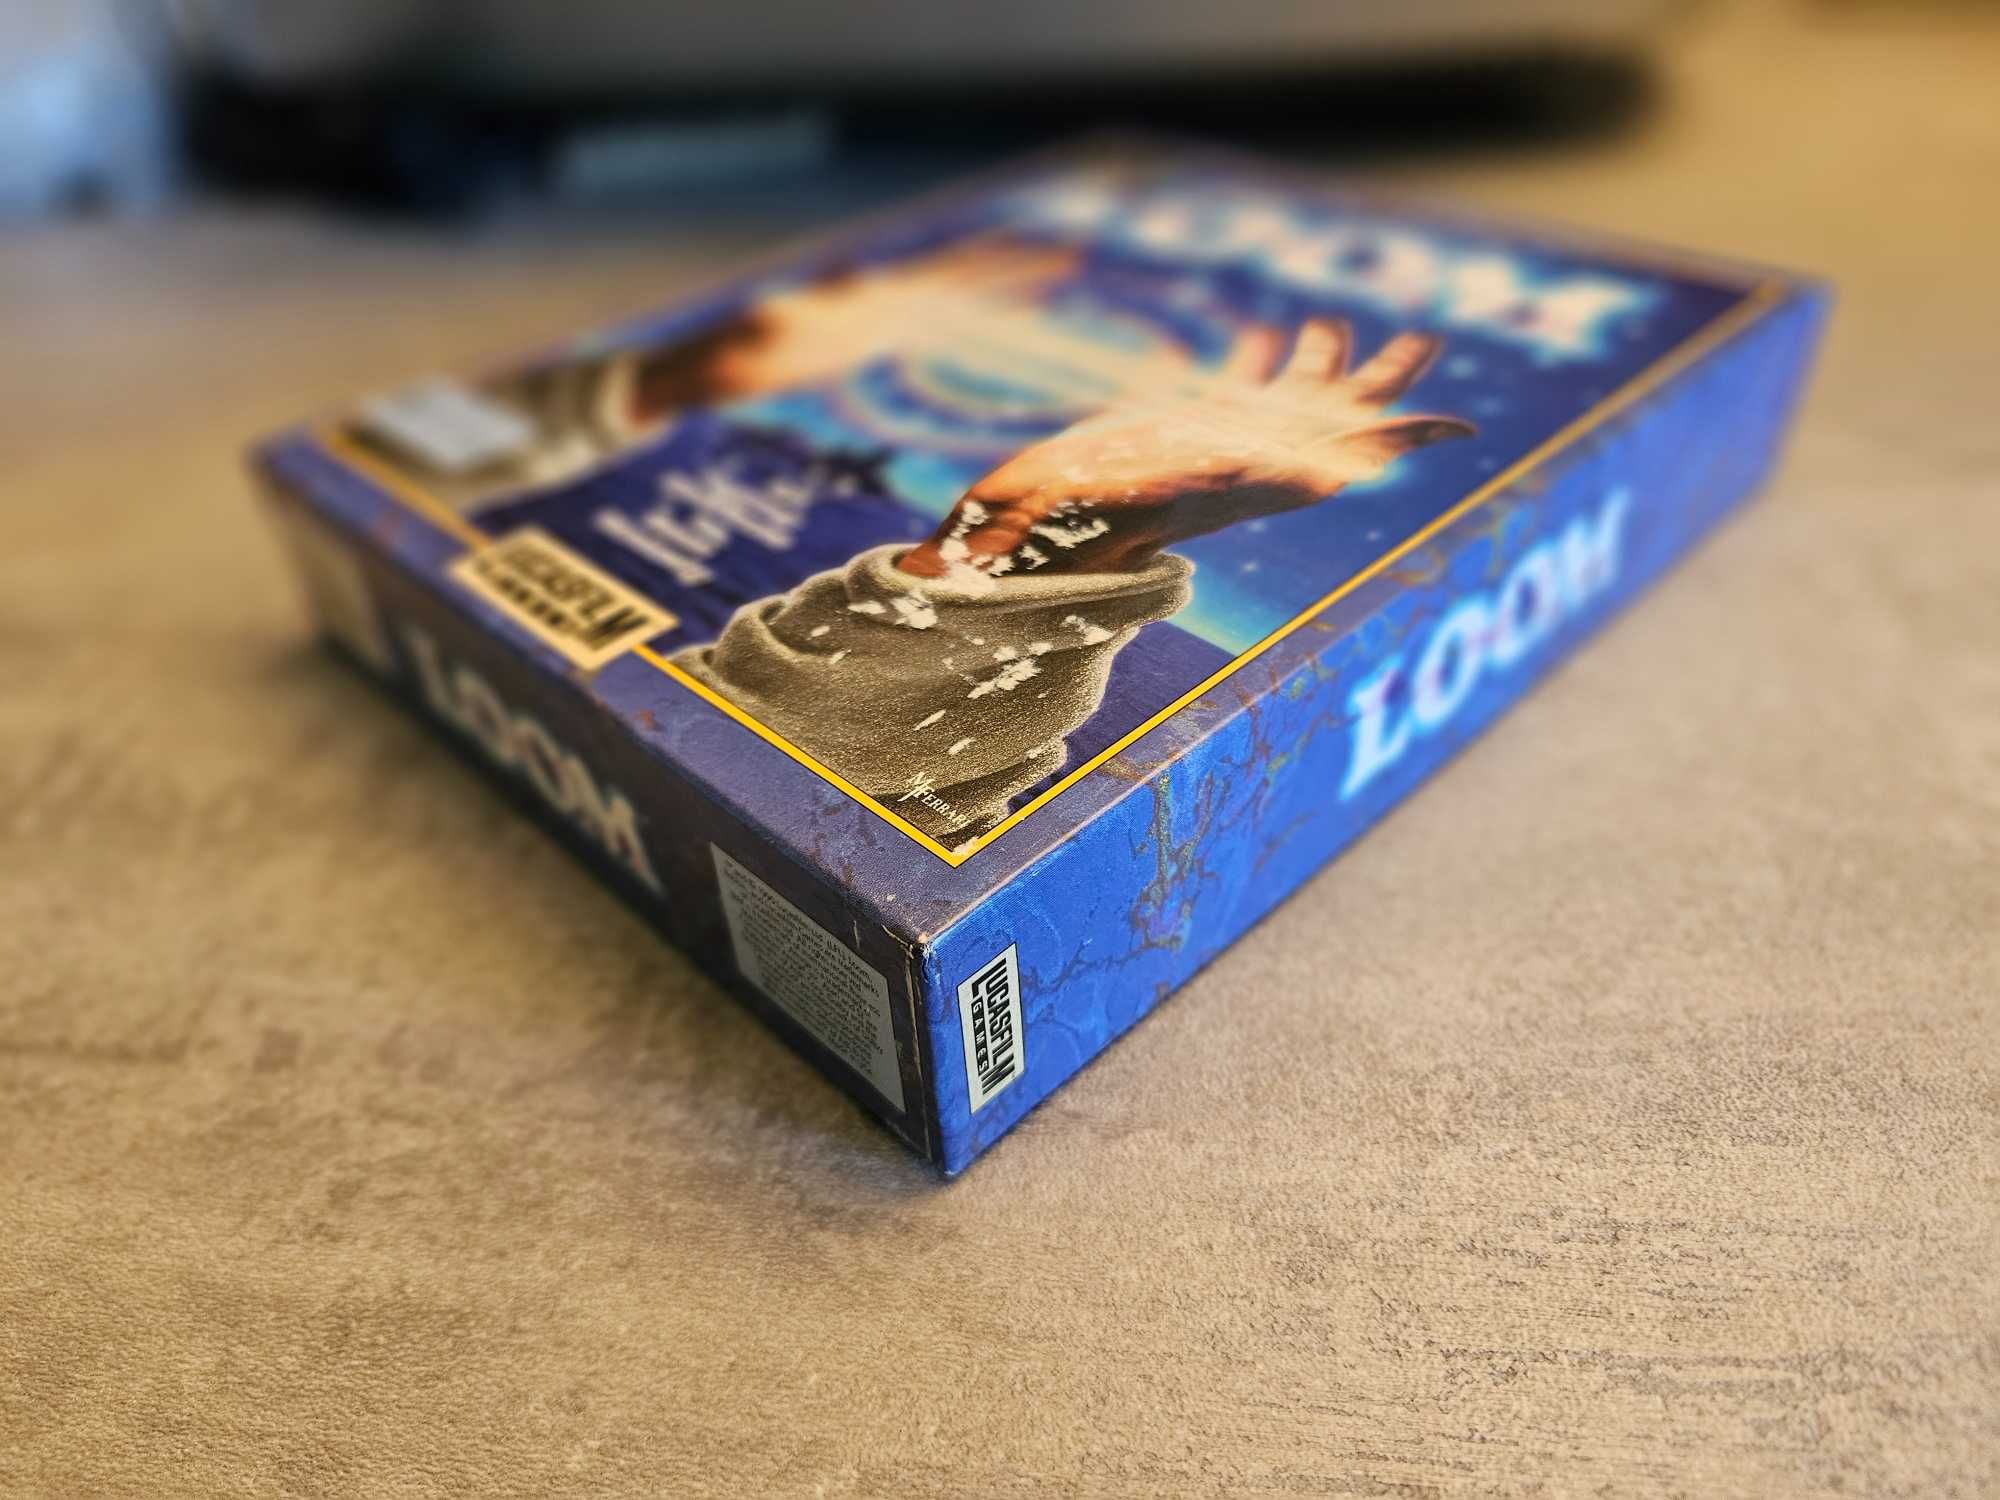 [LOOM] PC BIG BOX [1990] [LucasFilm] wersja 5.25, zafoliowana kaseta